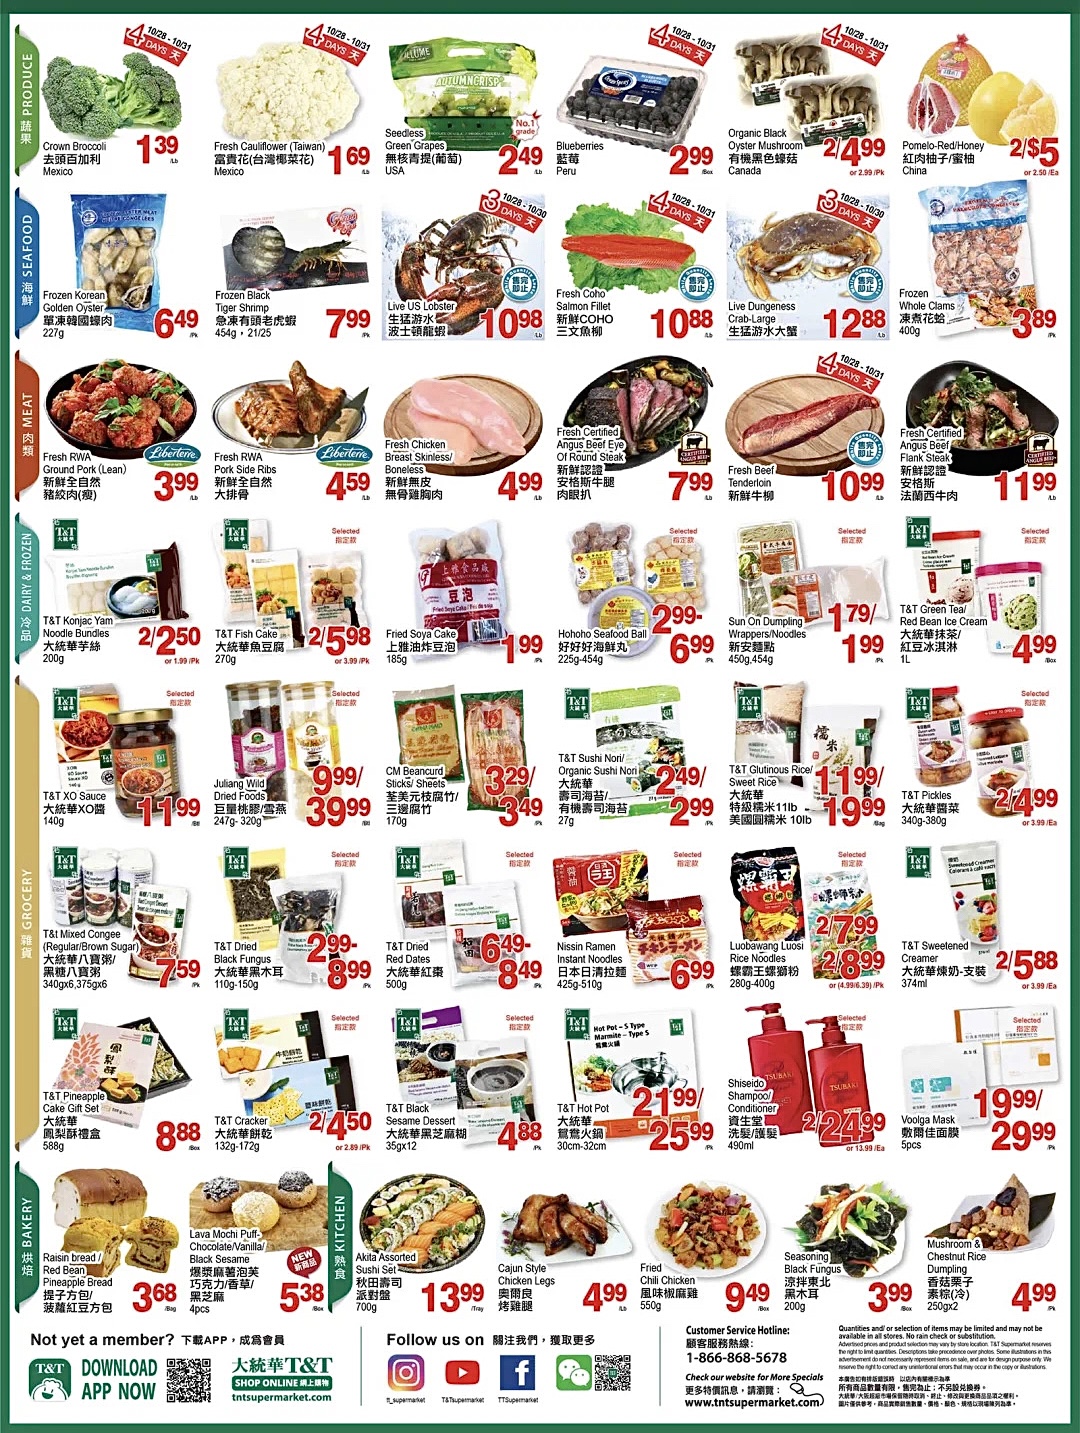 T&T Supermarket加拿大大统华超市 | Journey.ca 白菜价环球旅行